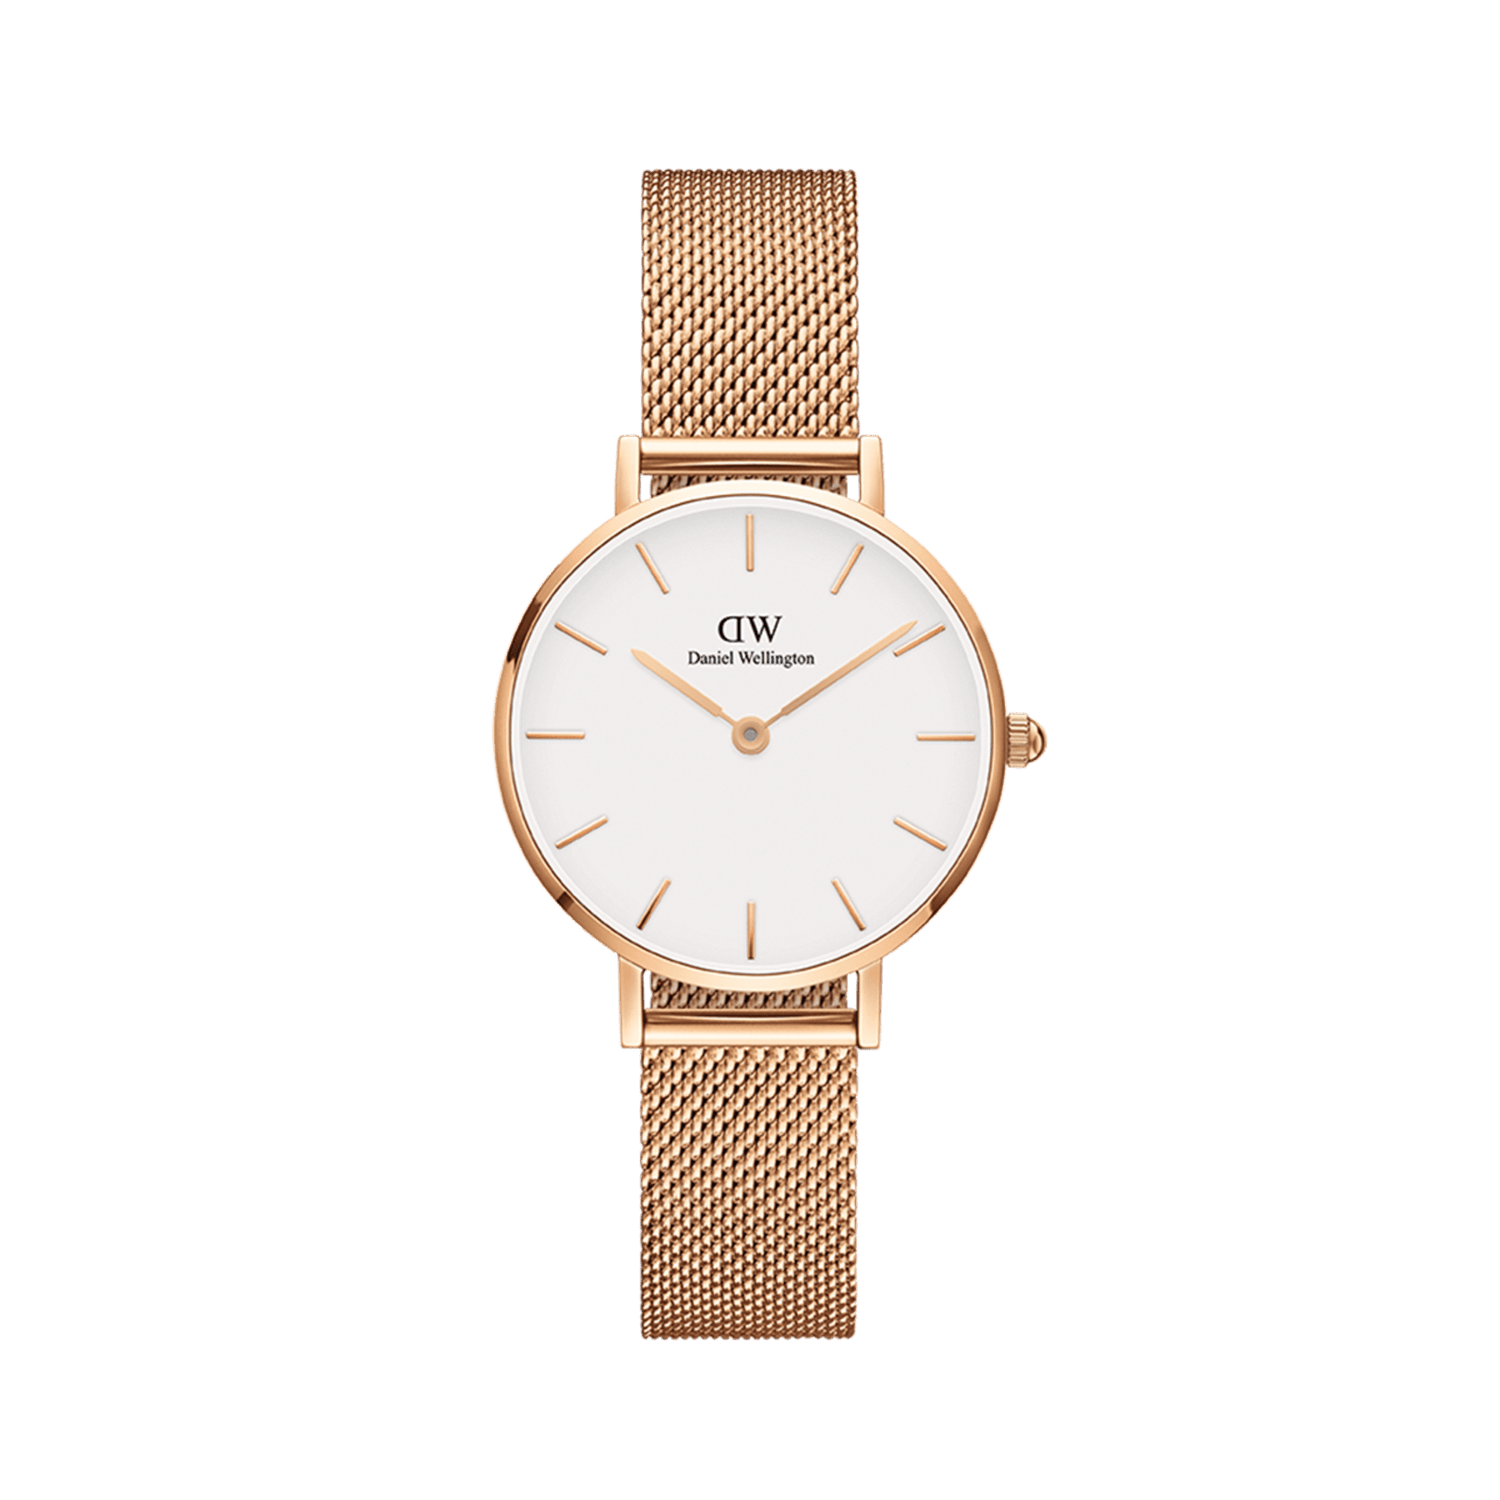 Koor is meer dan De onze Petite Melrose - Women's watch in Rose Gold & White| DW – Daniel Wellington  Global